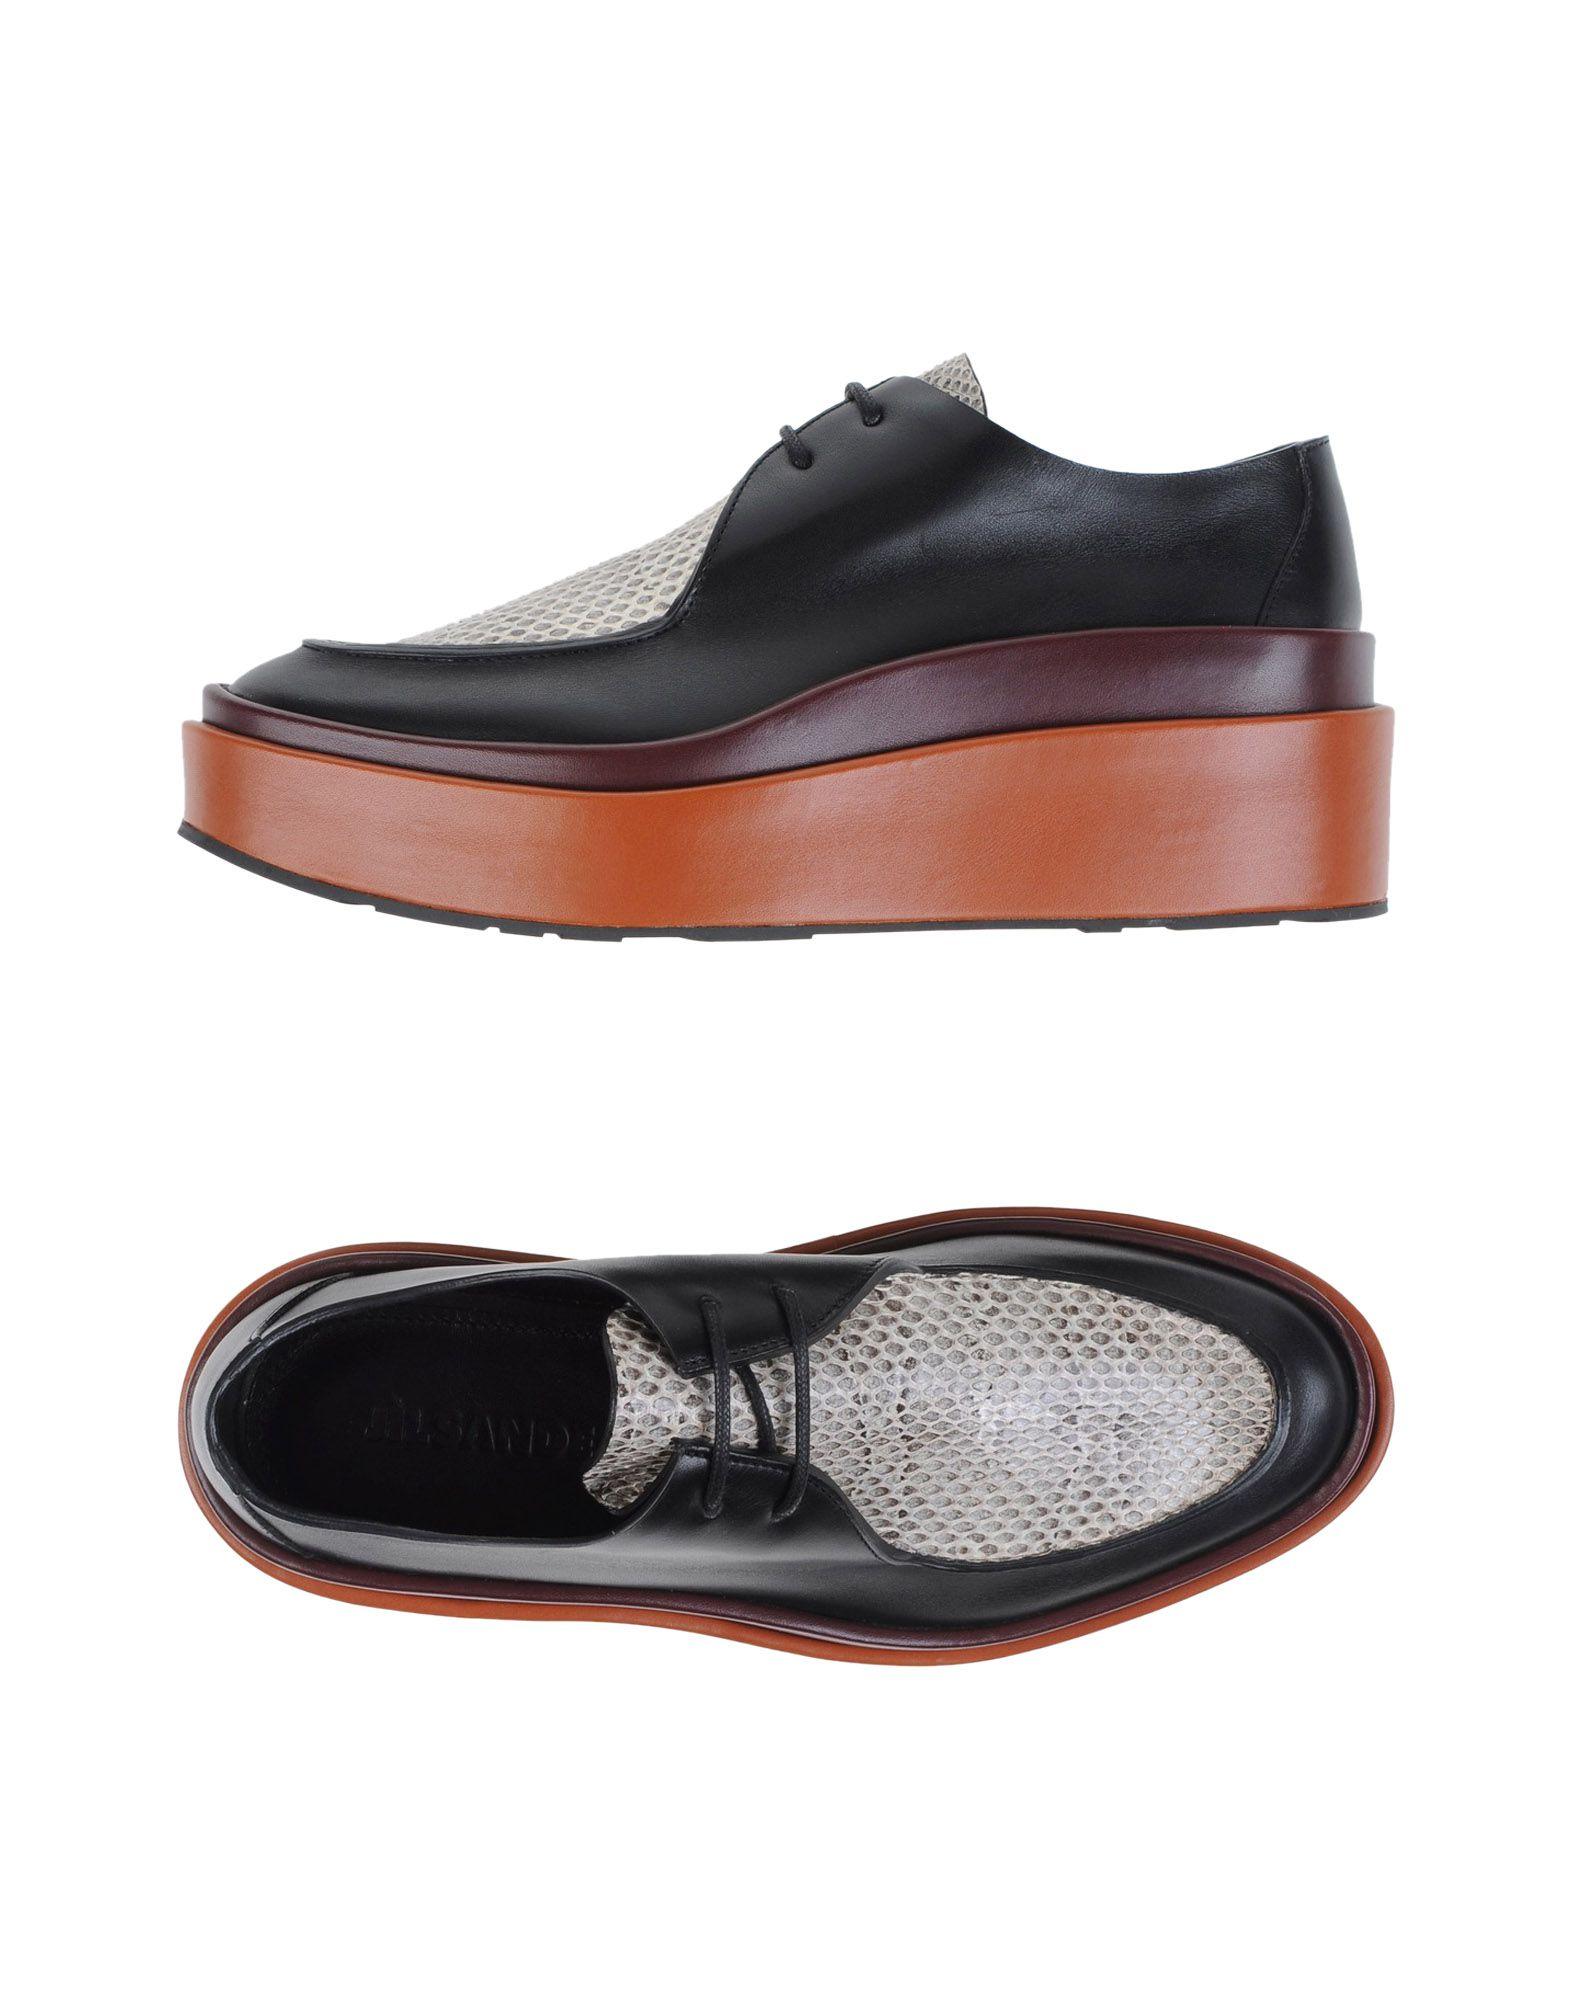 Jil Sander Leather Lace-up Shoe in Black - Lyst